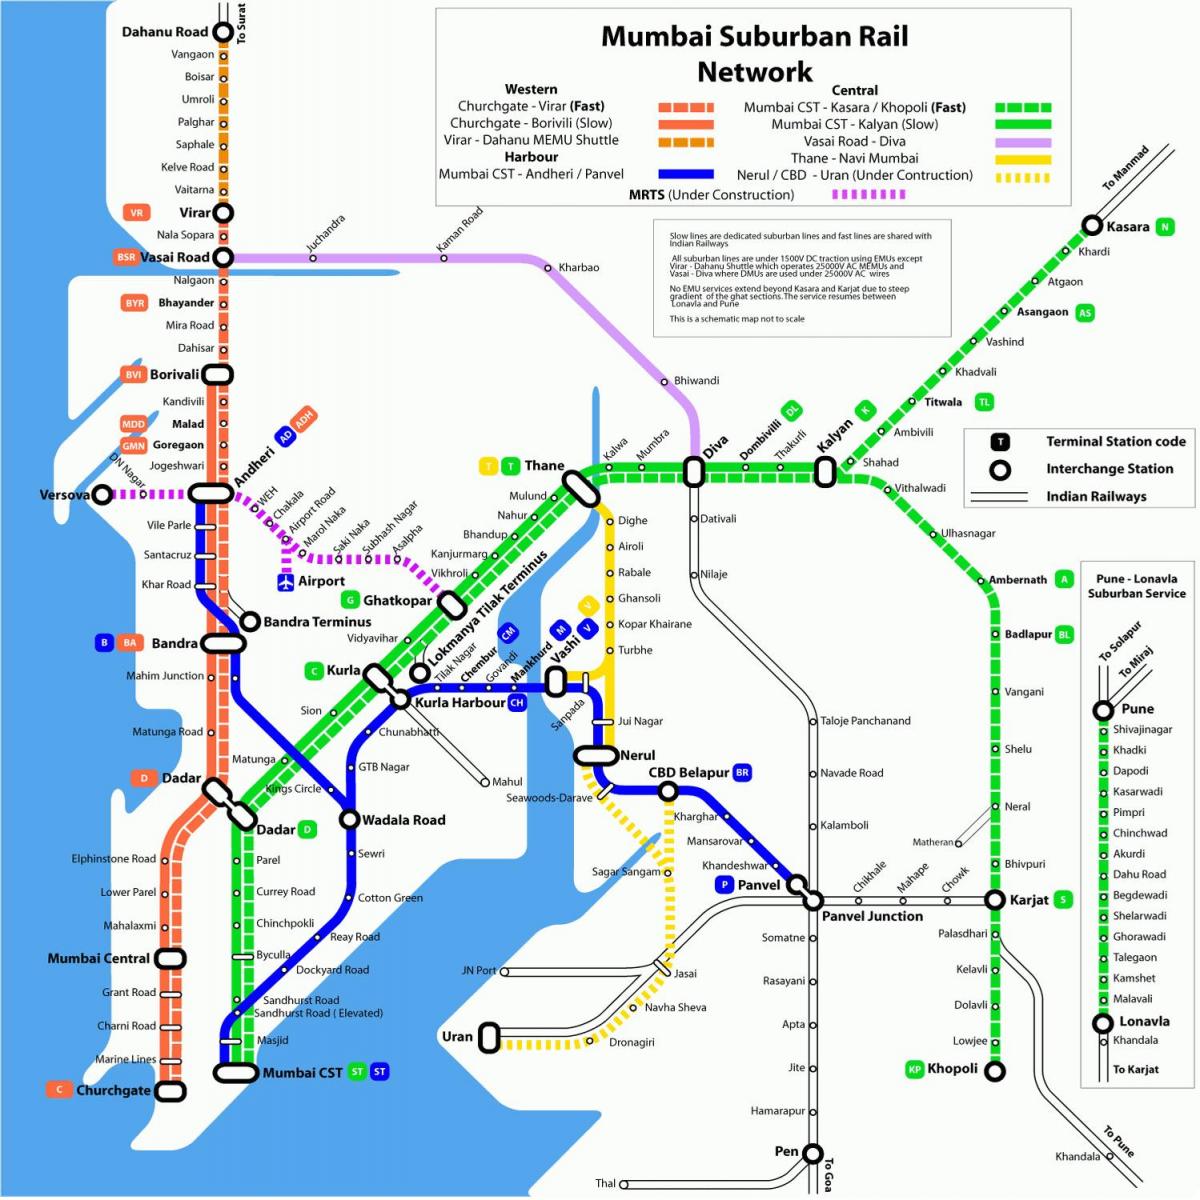 Bombay tokiko tren ibilbidea mapa